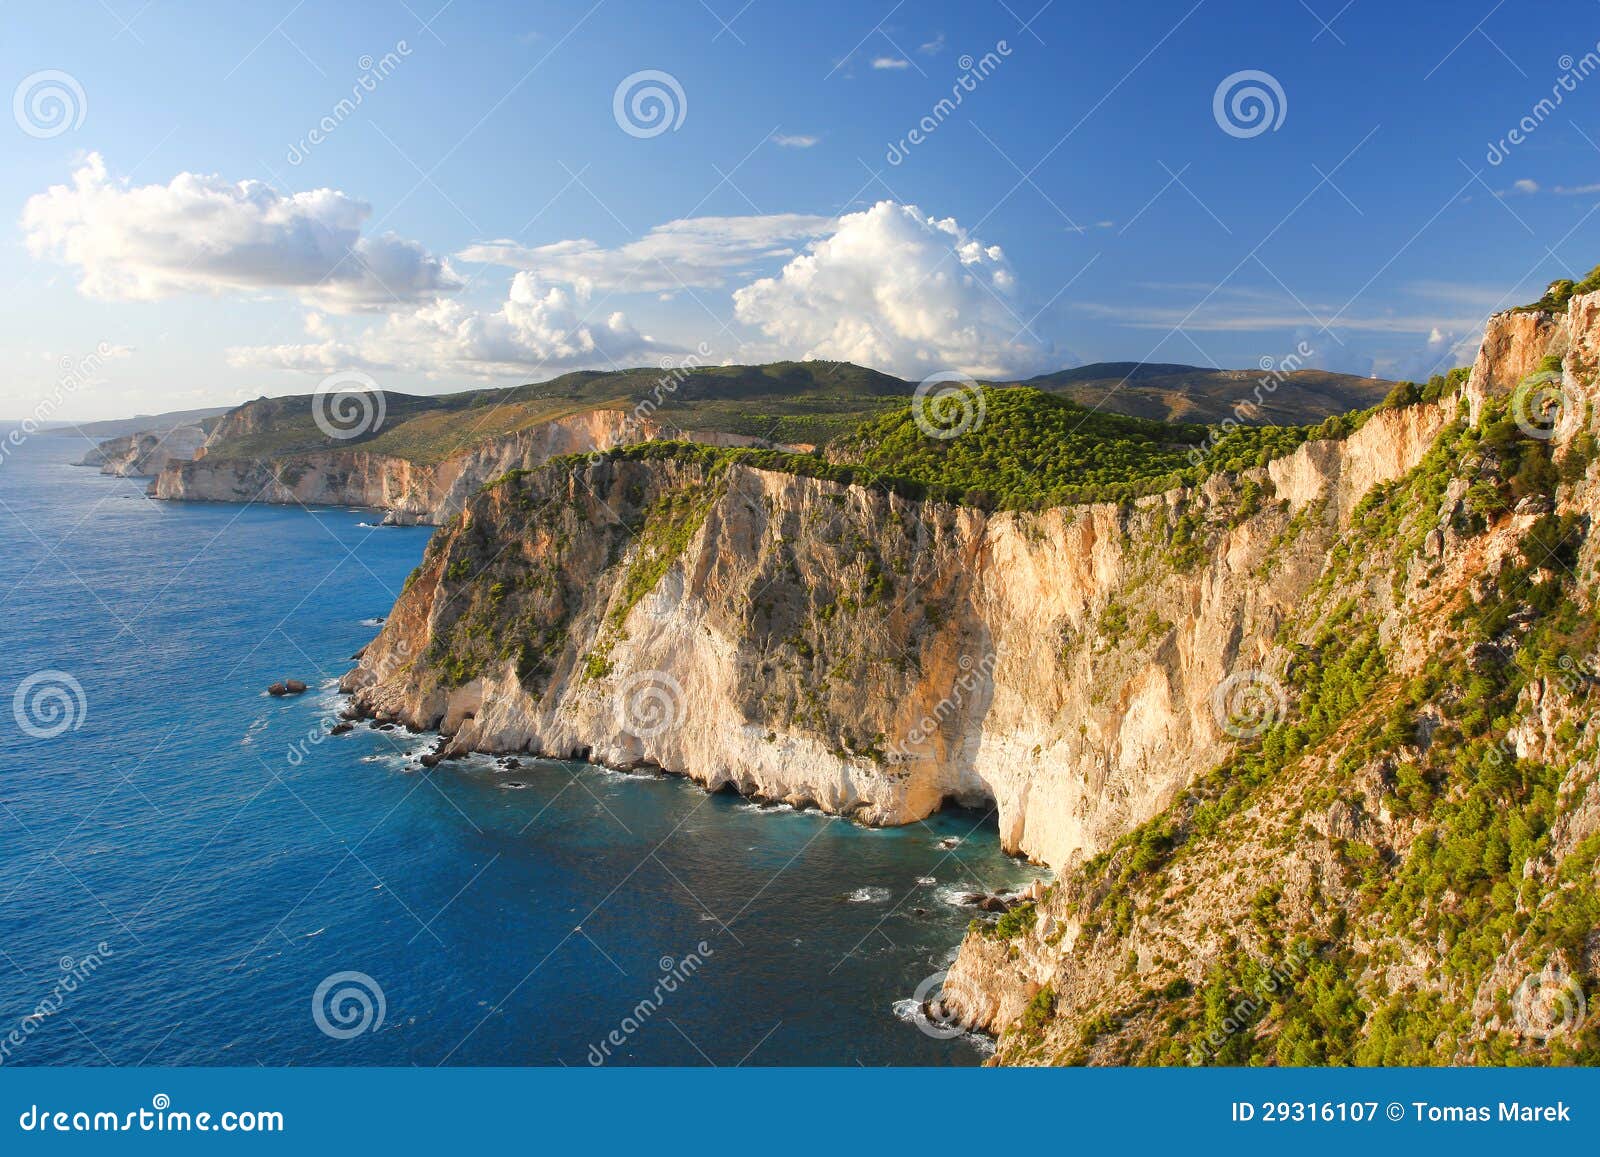 Greek Coast in Zakinthos Island Stock Image - Image of mediterranean ...